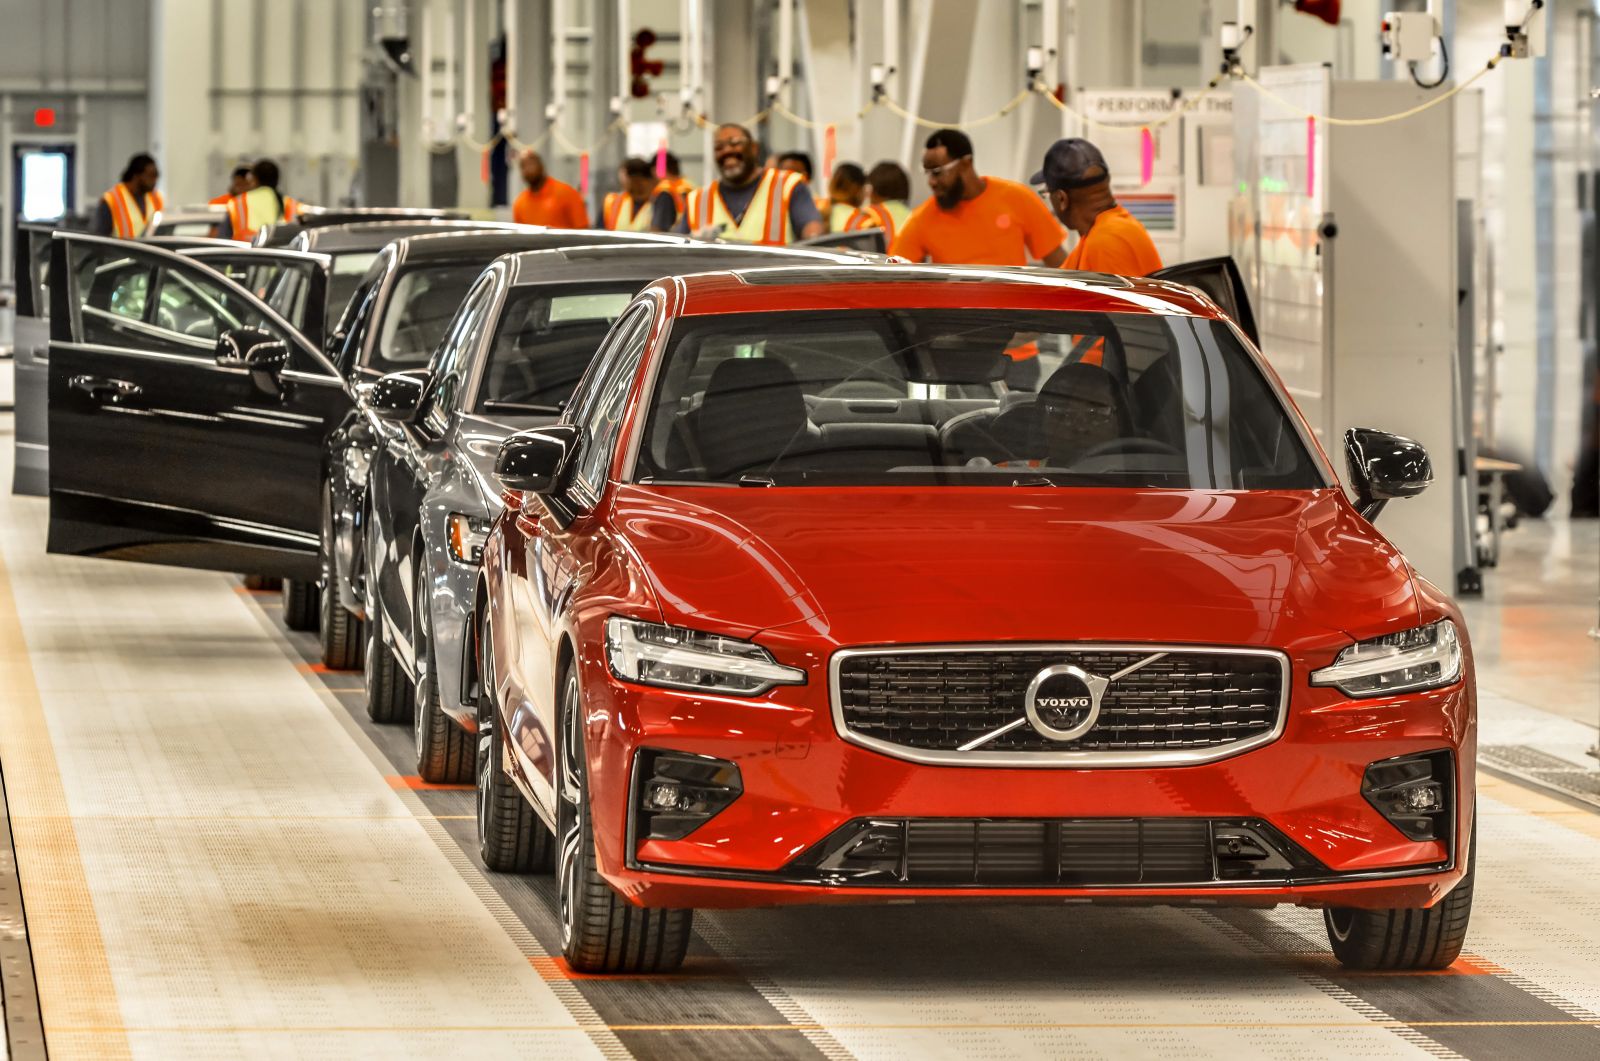 Volvo Cars produces S60 sedans at its plant near Ridgeville. (Photo/Volvo Cars)